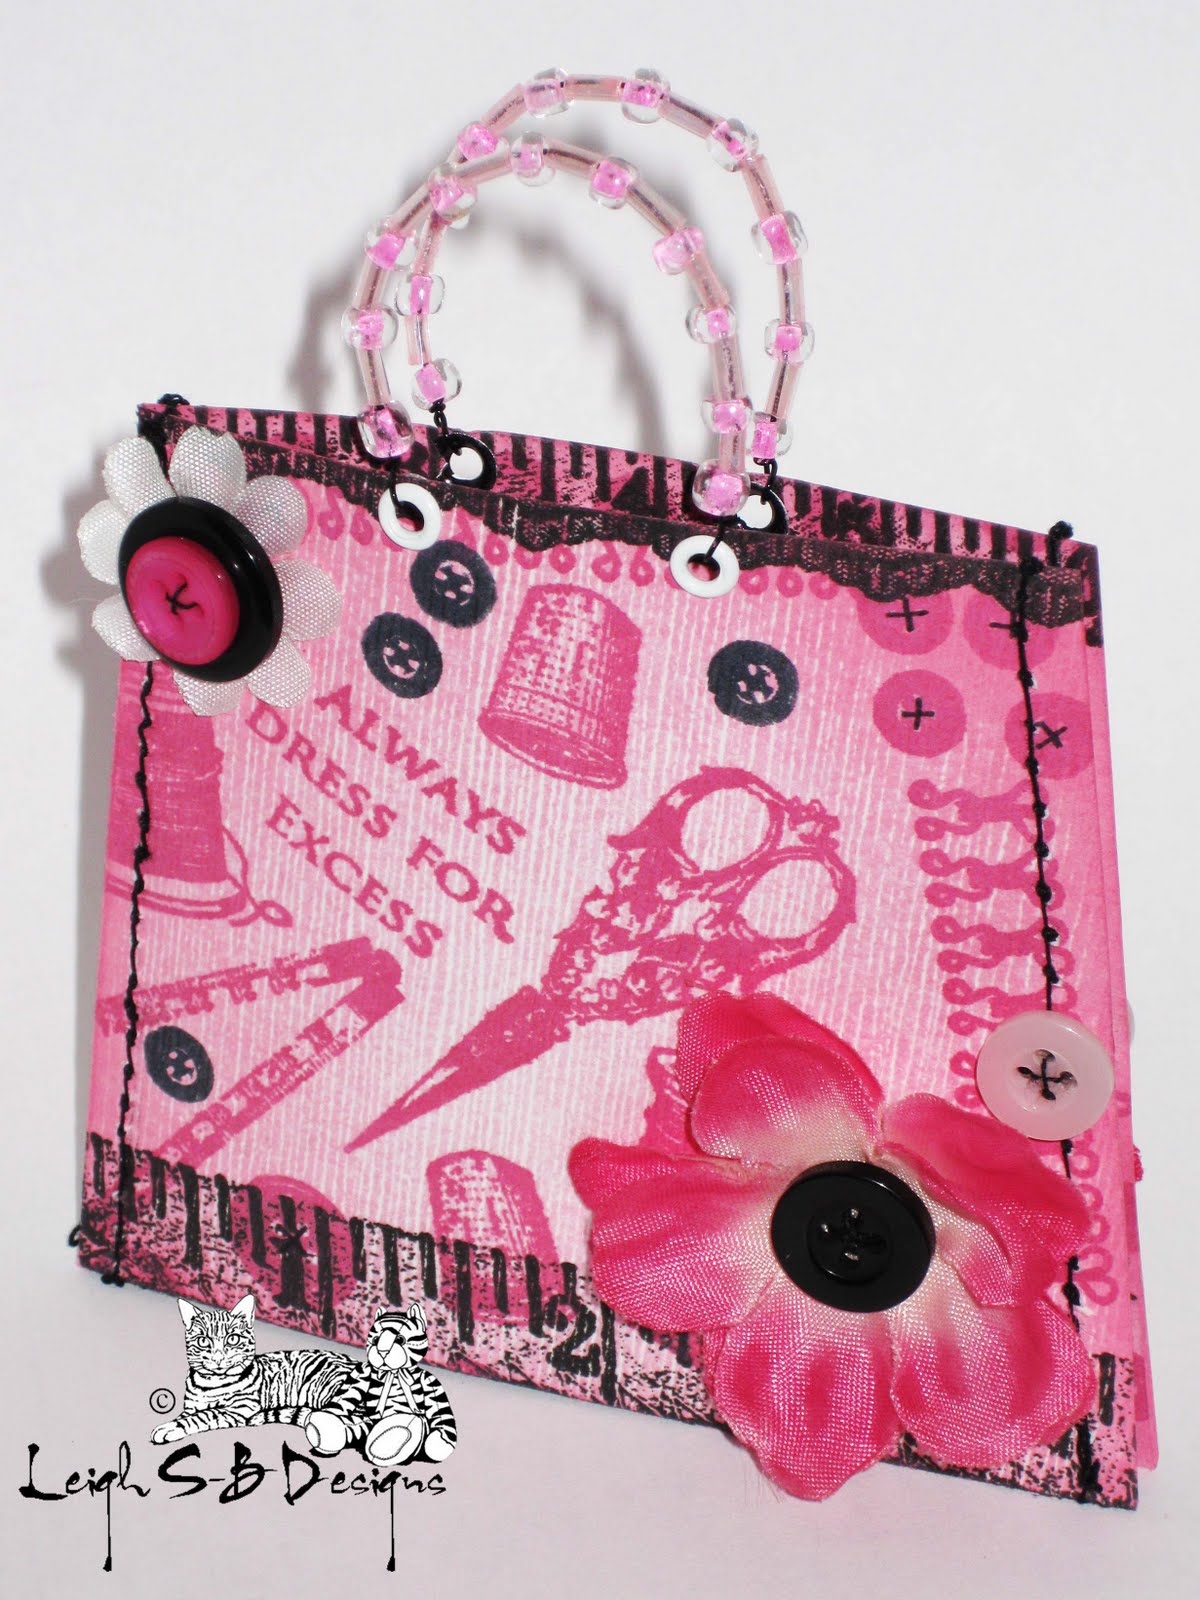 LeighSBDesigns: Mini Handbag Sewing Kit - A Blockheads Design Team ...